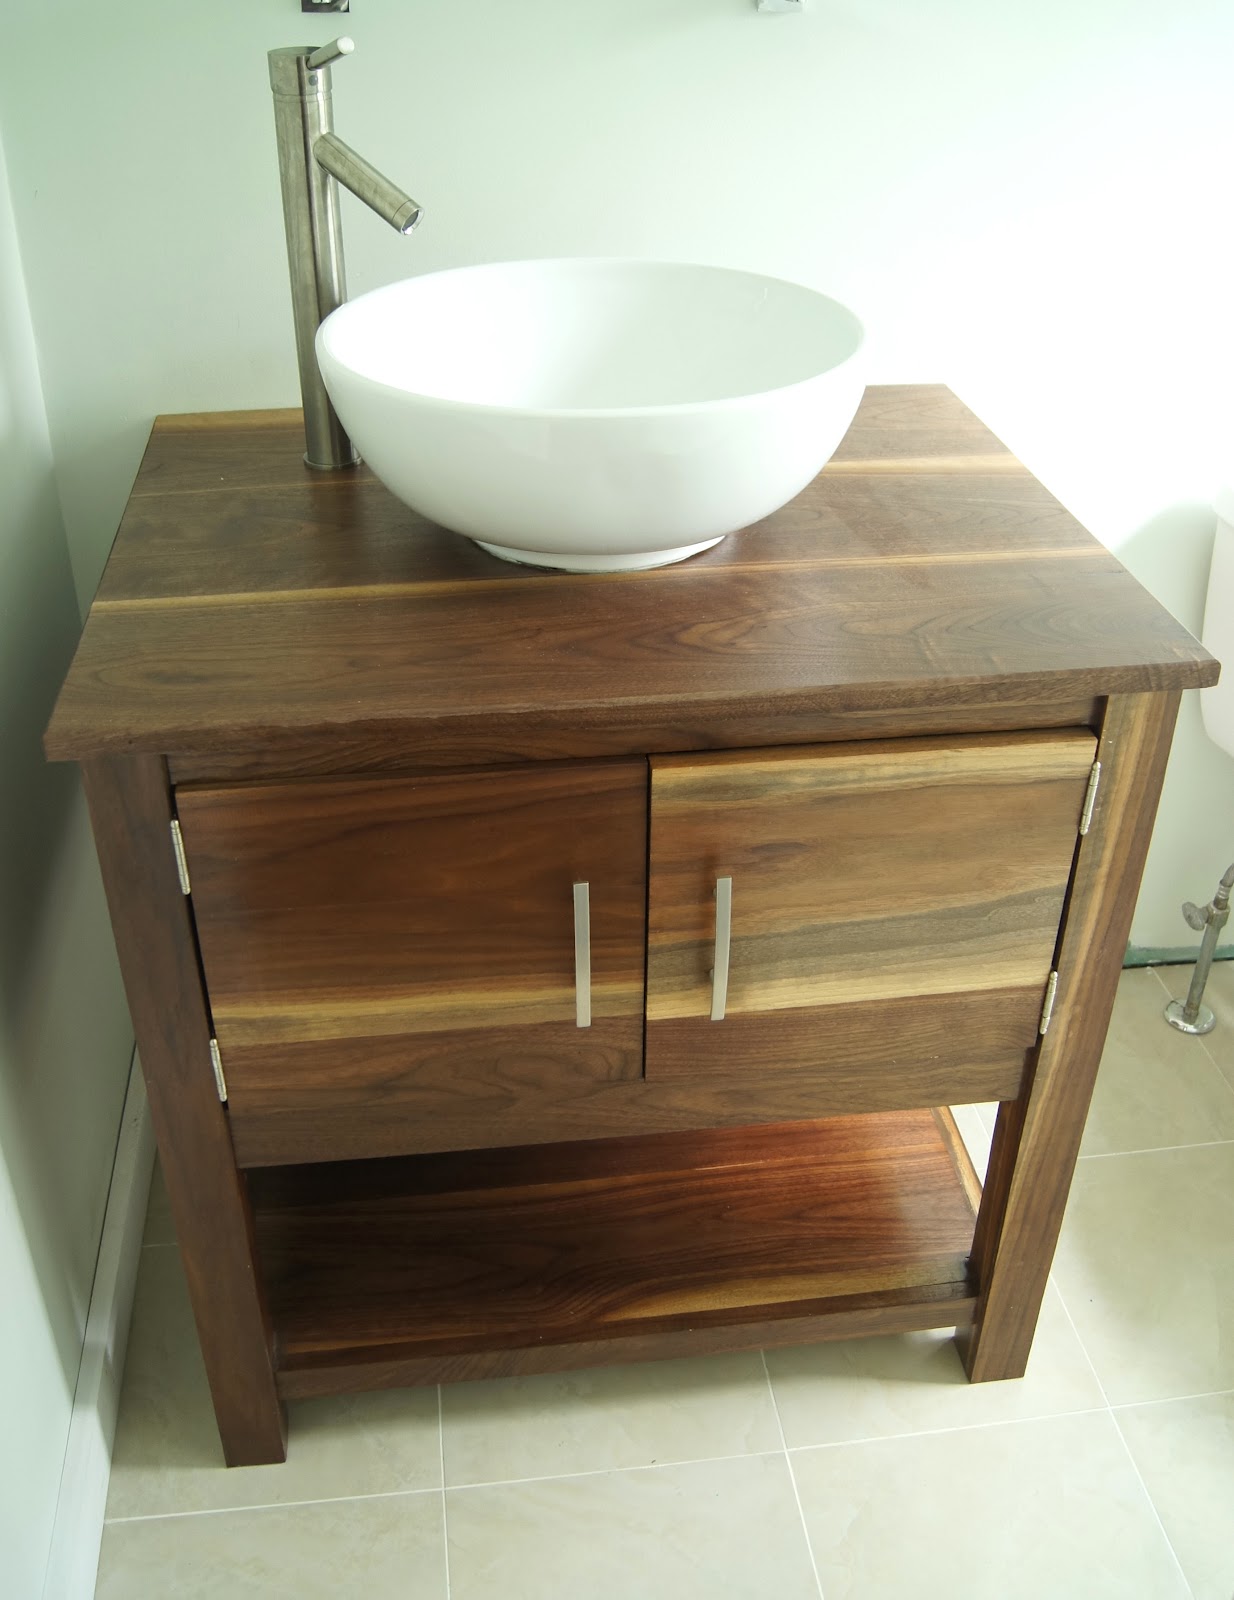 wood bathroom ideas DIY Bathroom Vanity